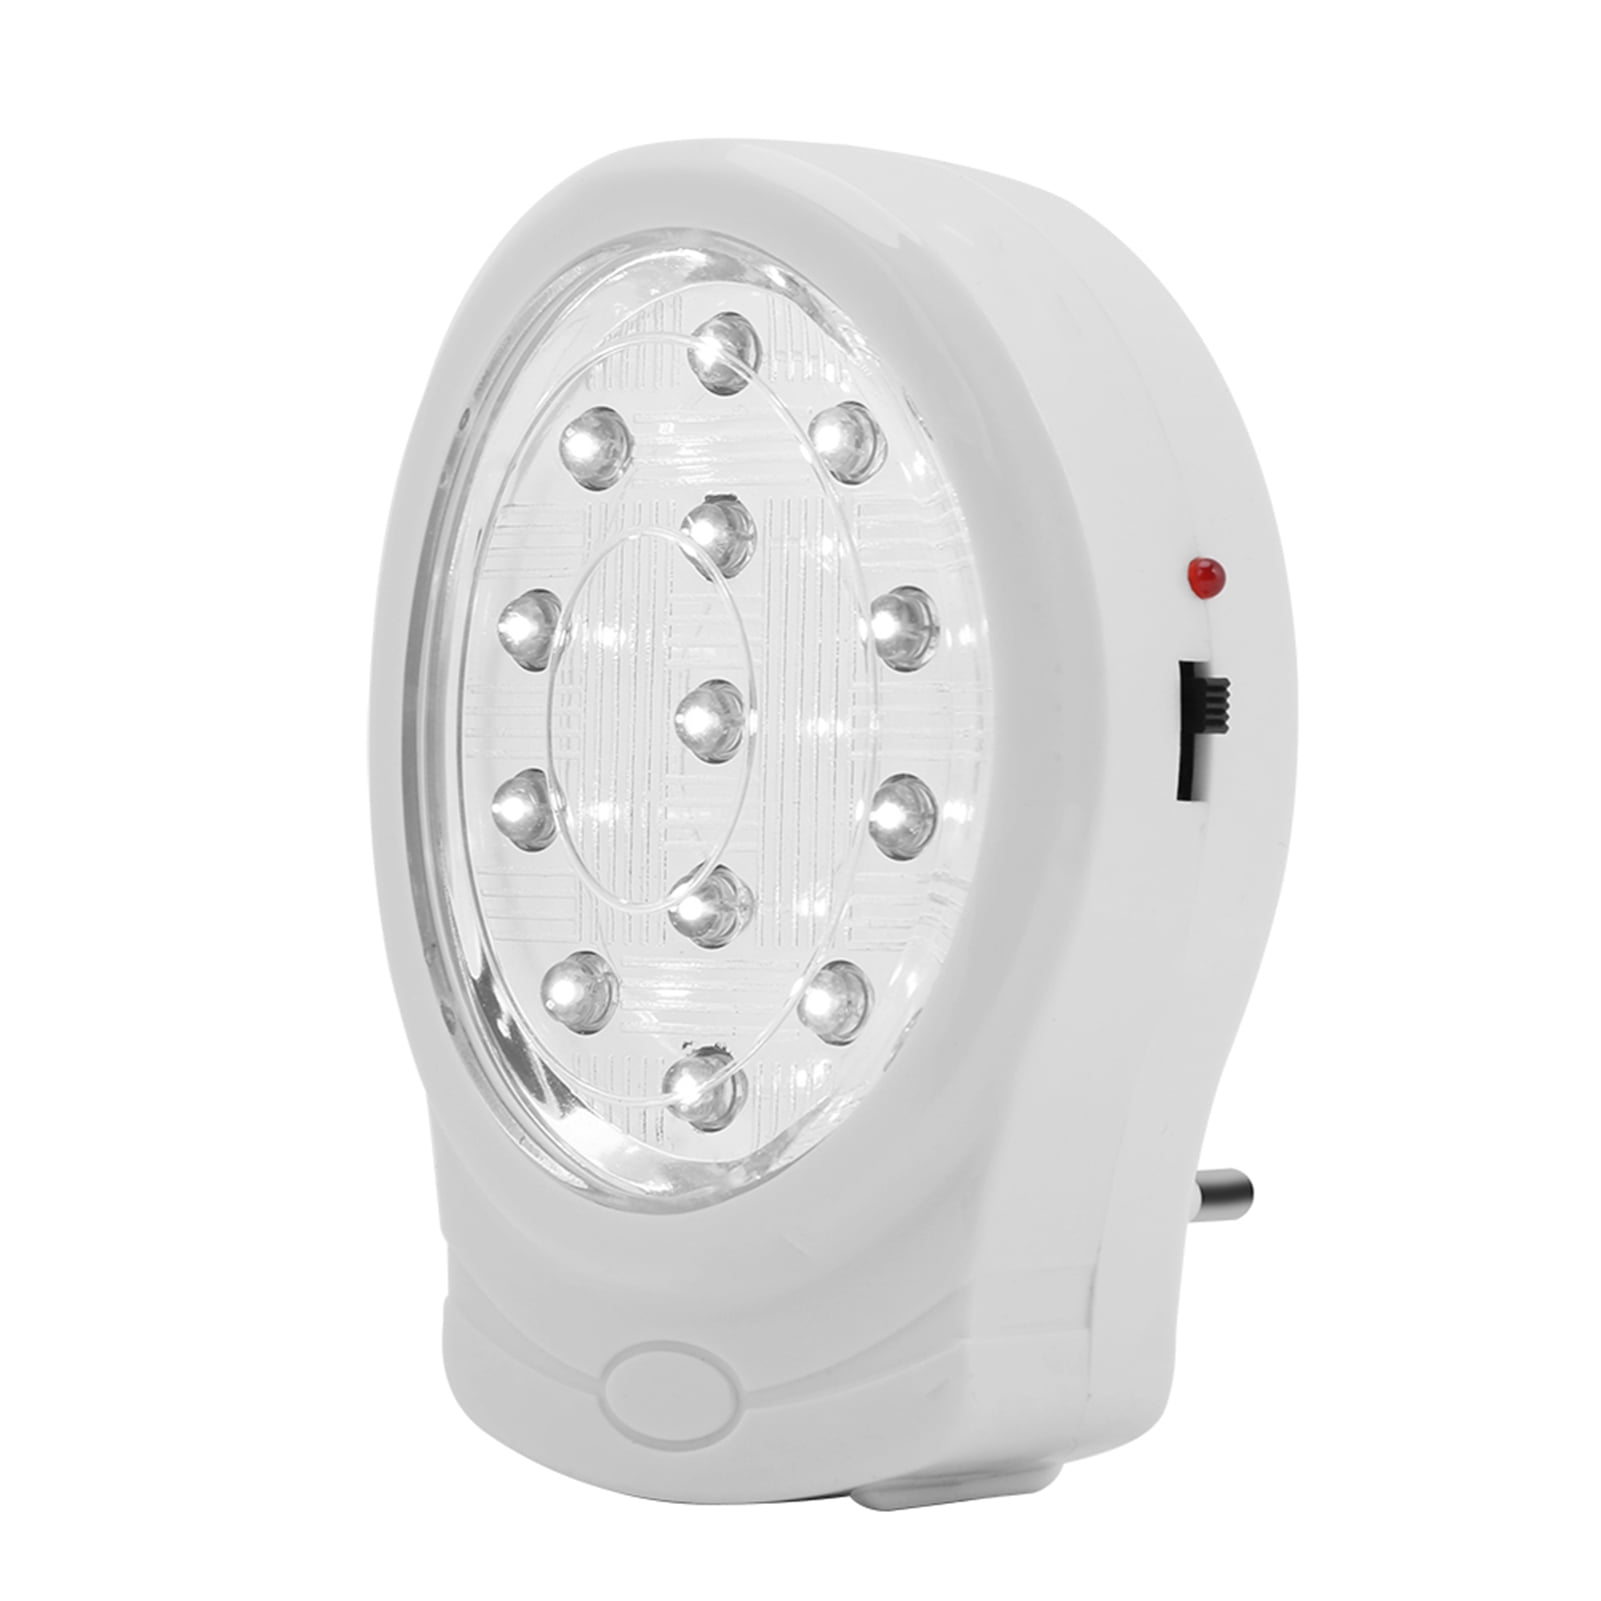 Senjay Emergency LED Light, Home Emergency Light, Automatic Power